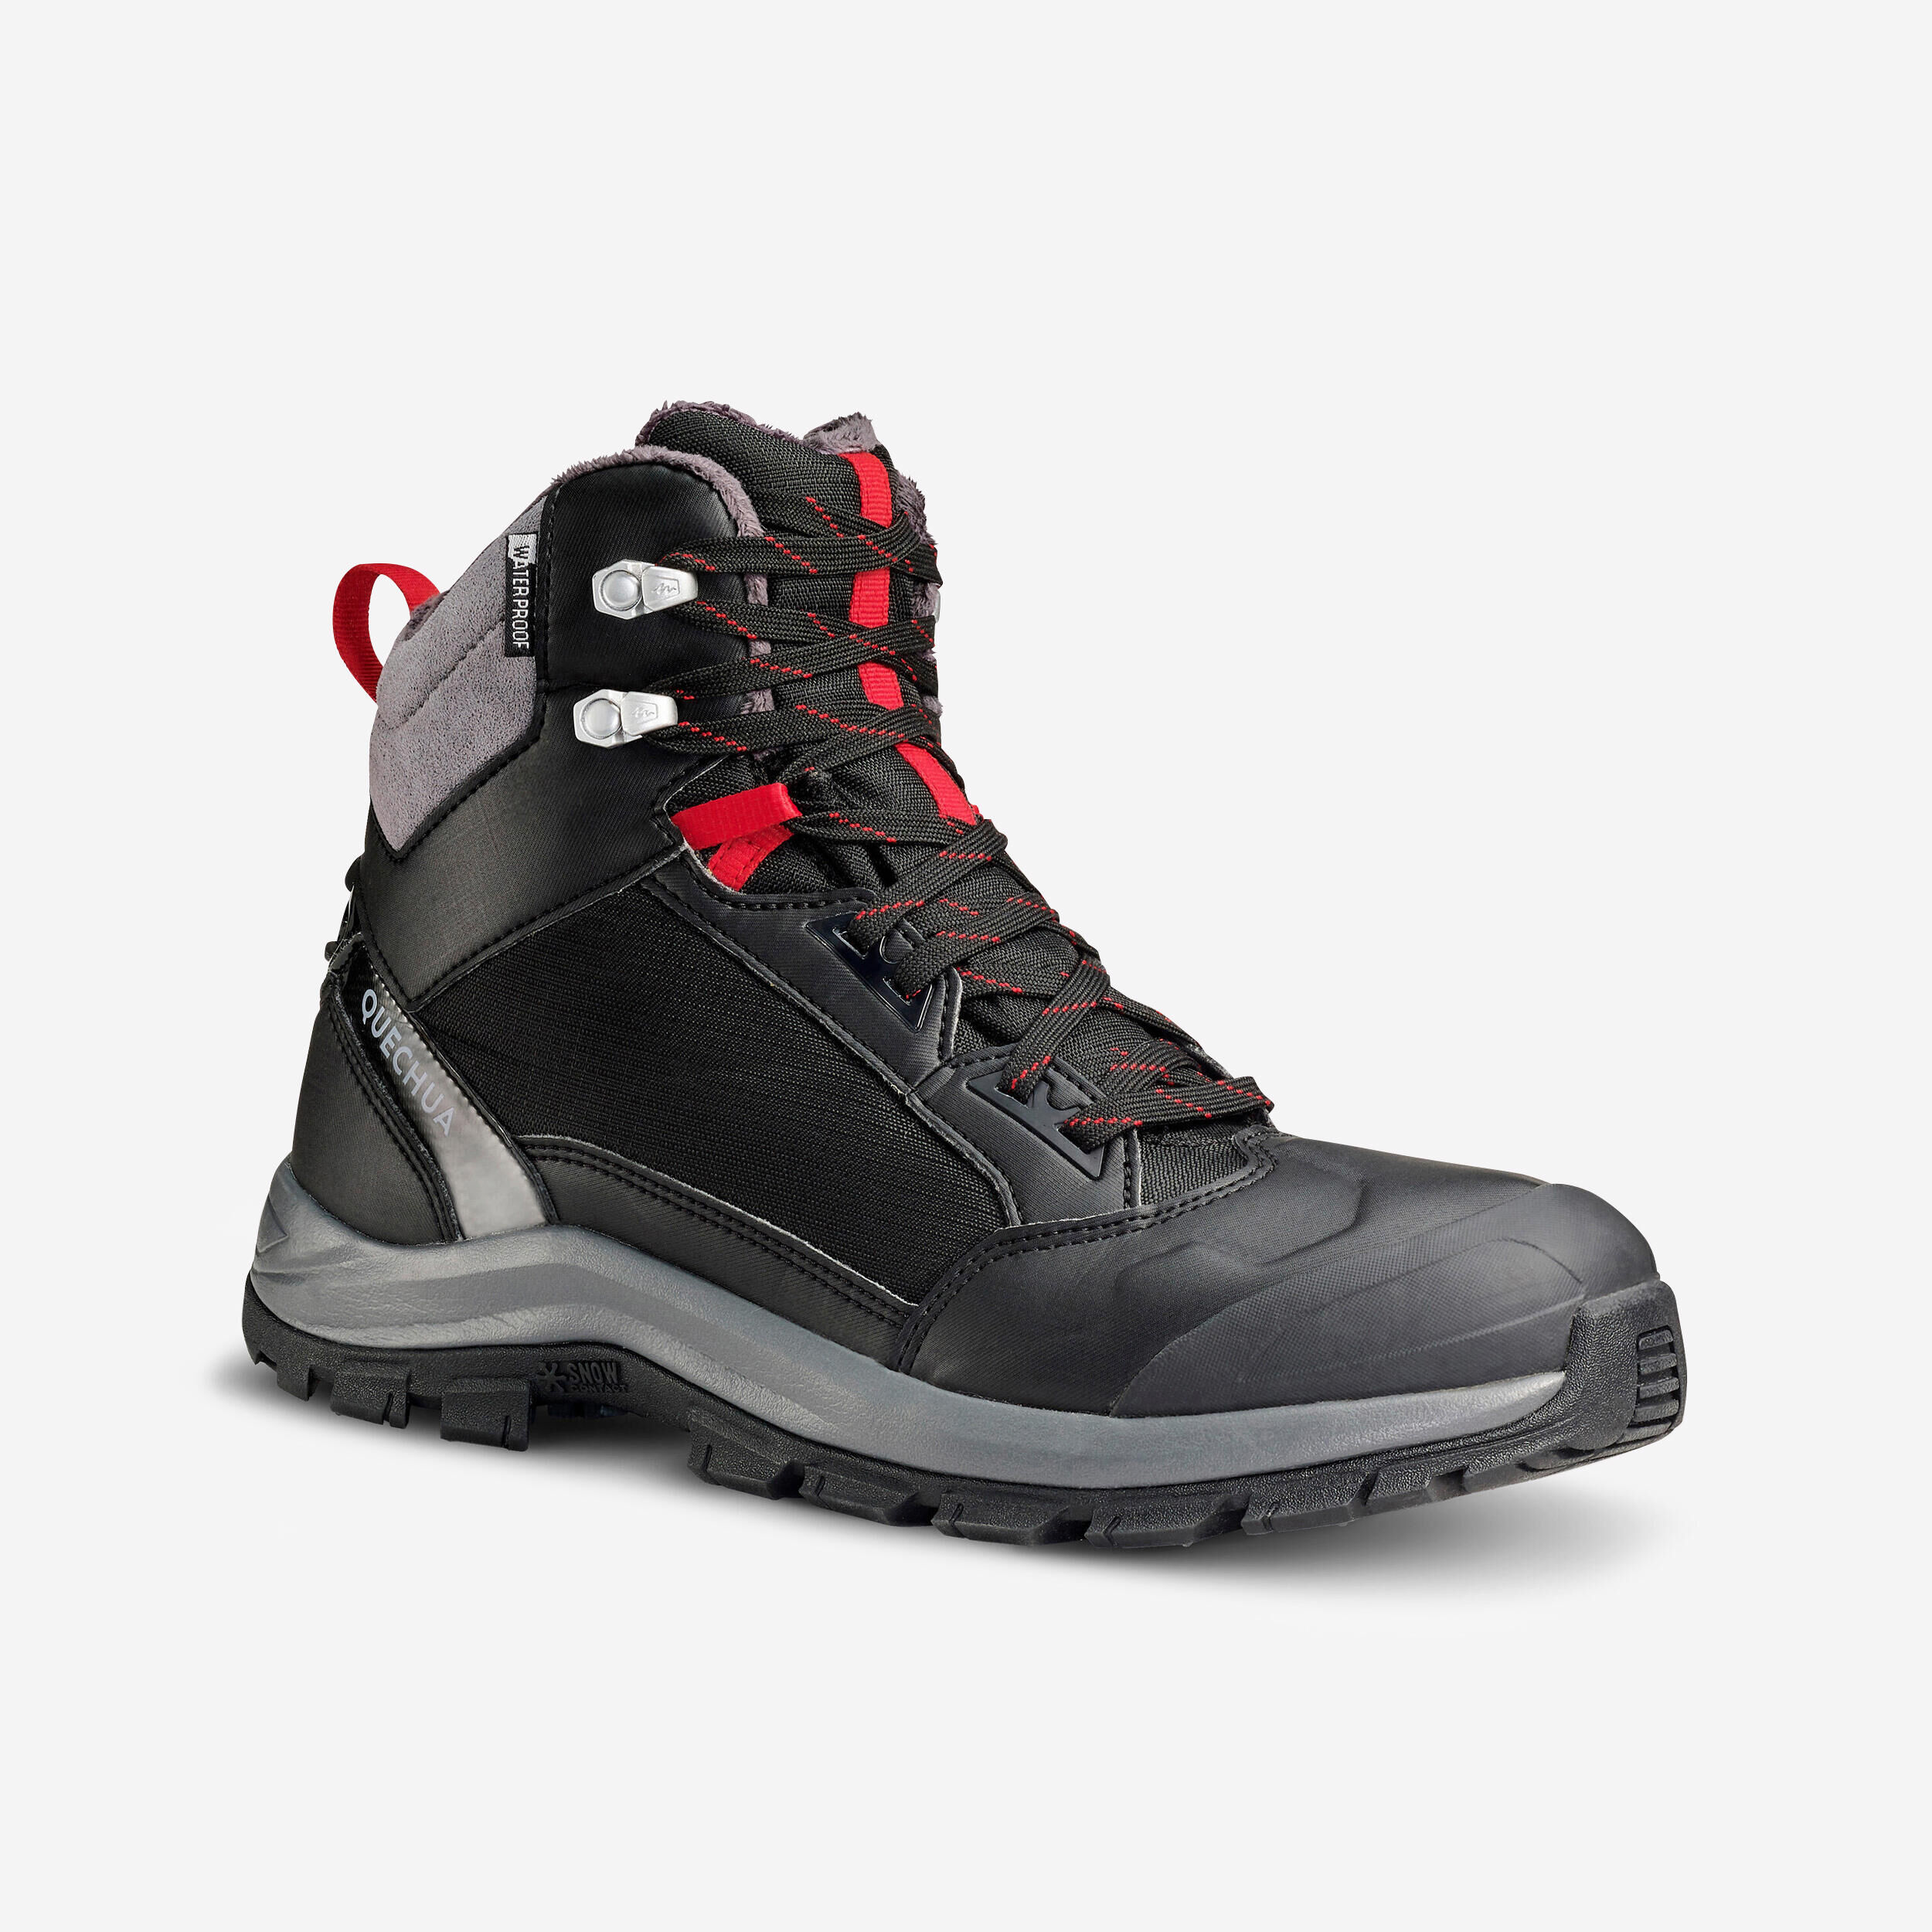 QUECHUA Men’s Warm and Waterproof Hiking Boots - SH500 mountain MID